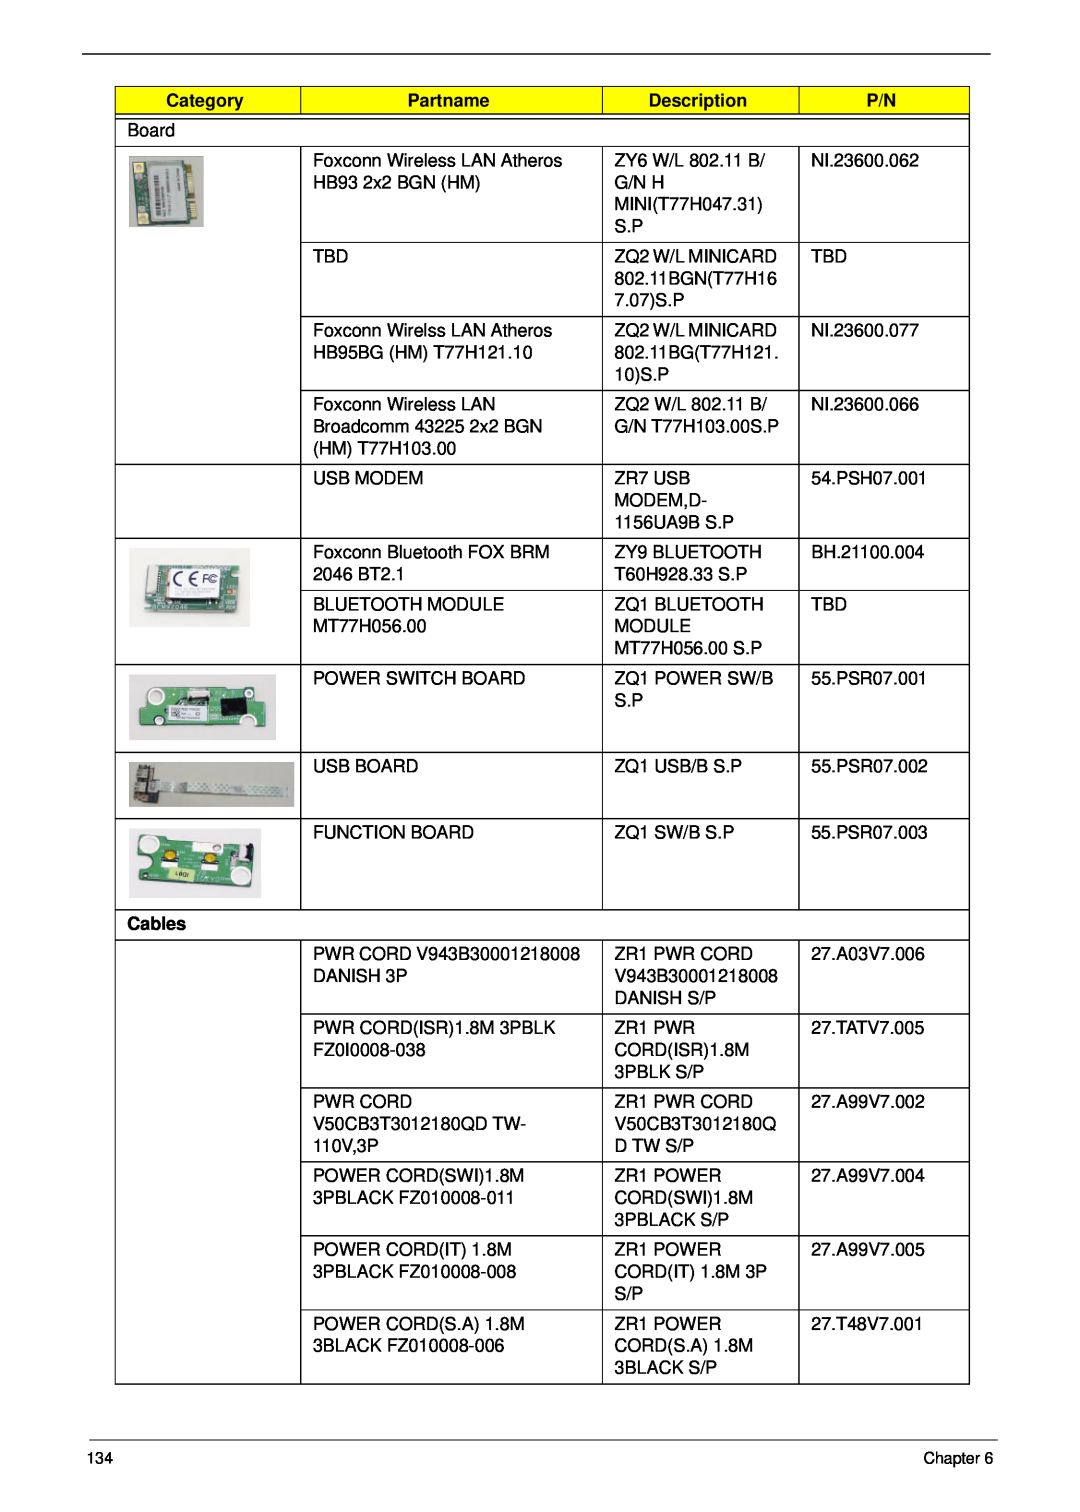 Aspire Digital 4625G manual Category, Partname, Description, Cables 